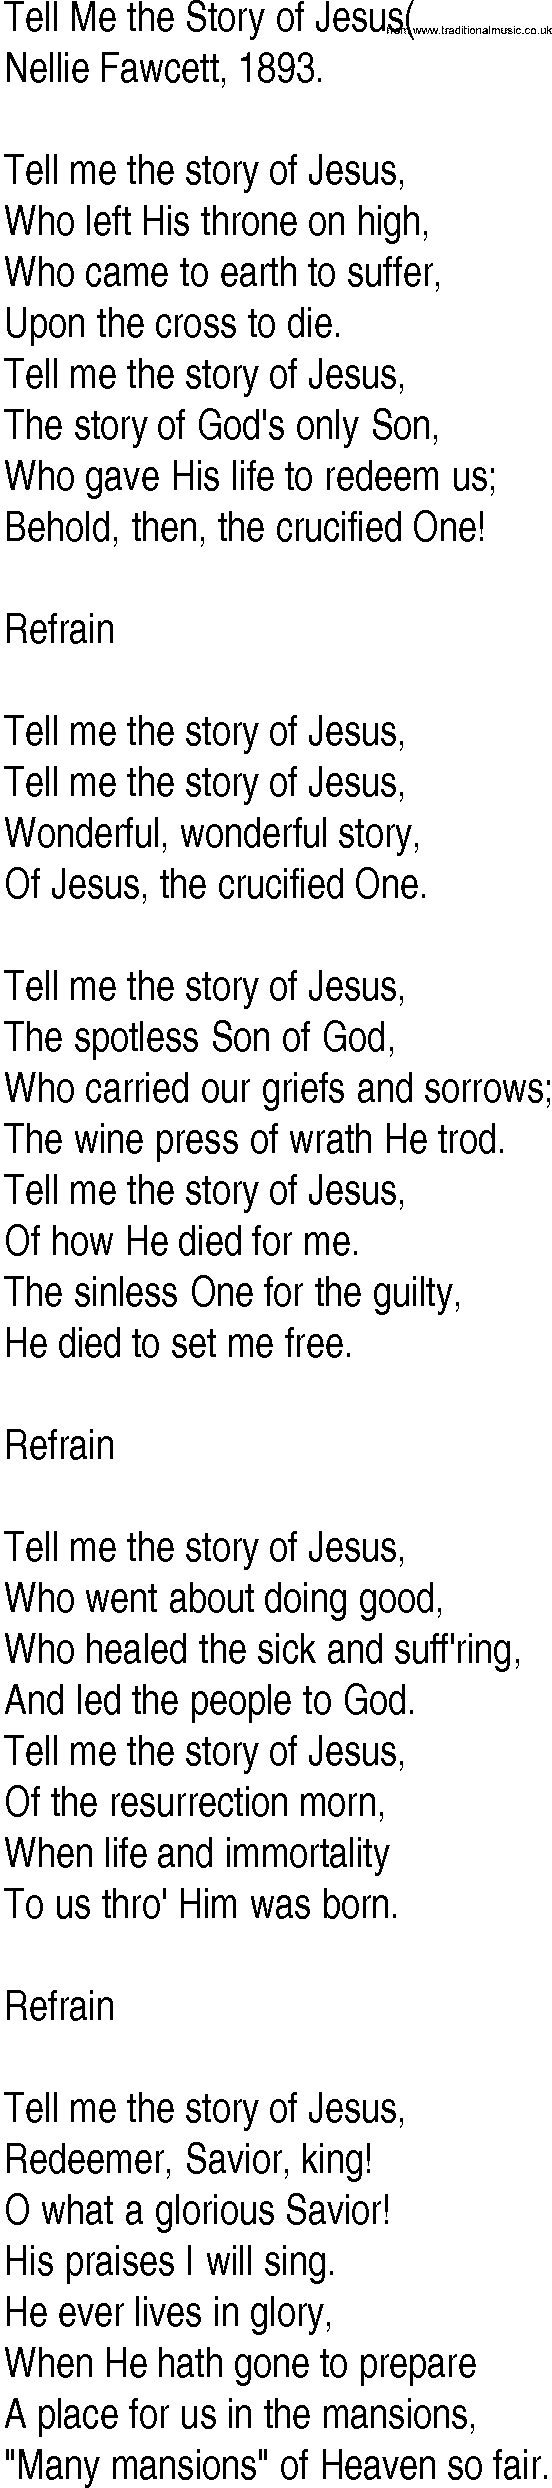 Hymn and Gospel Song: Tell Me the Story of Jesus( by Nellie Fawcett lyrics